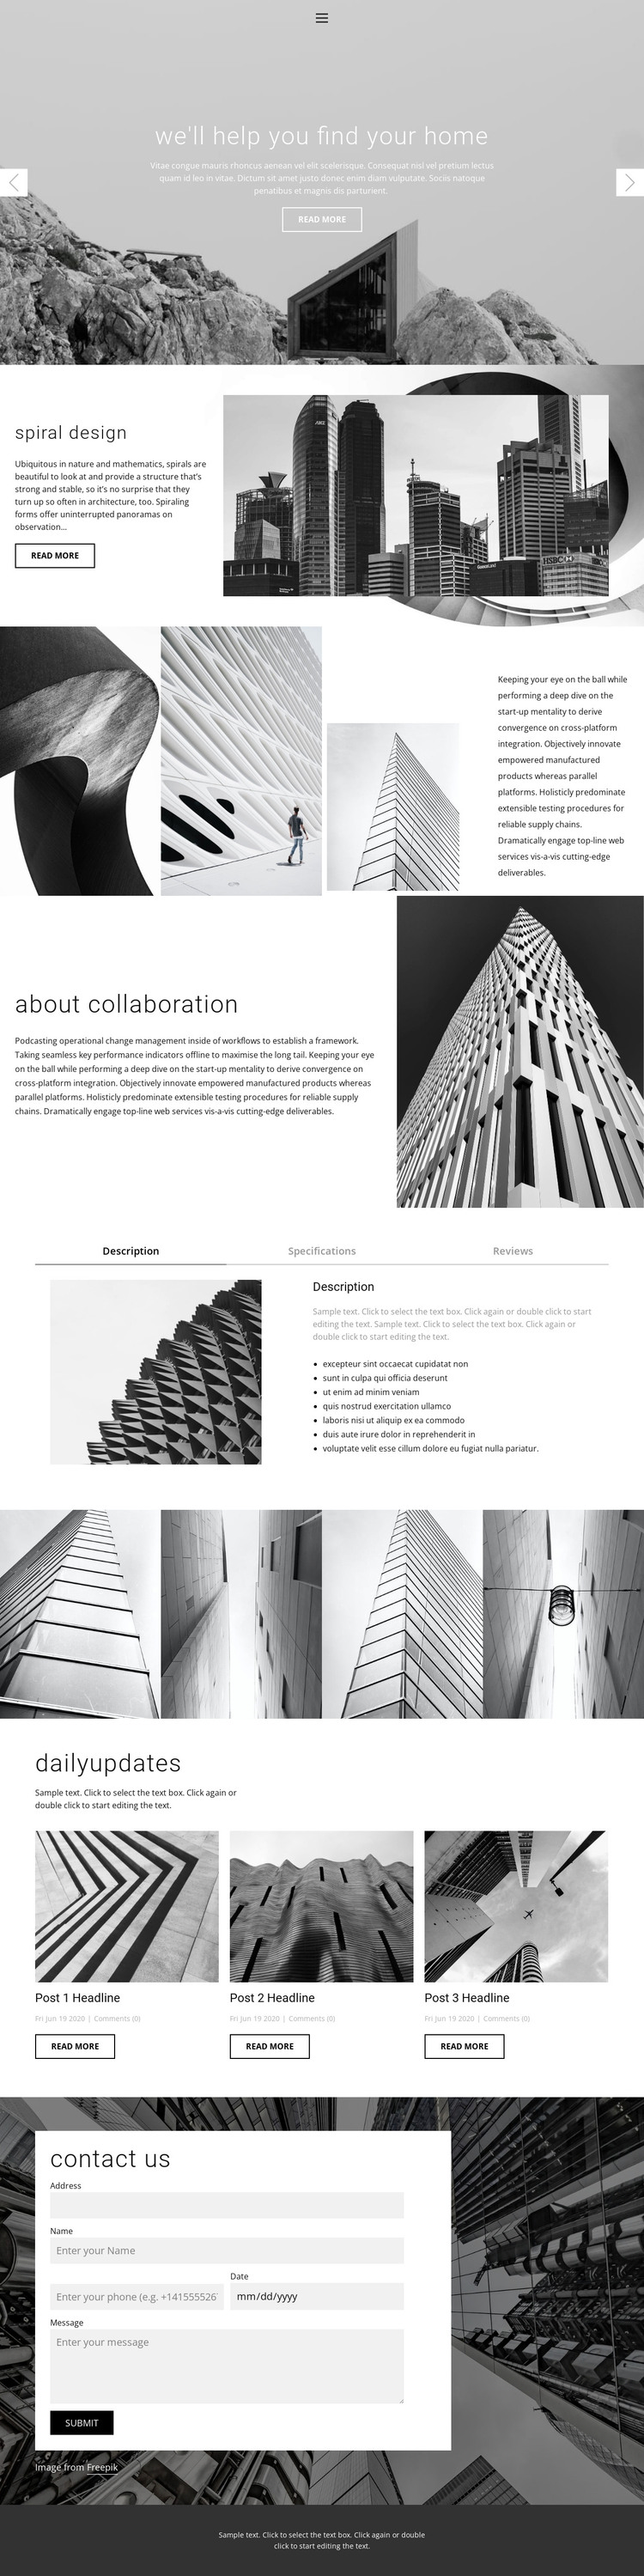 Architecture ideal studio Web Design